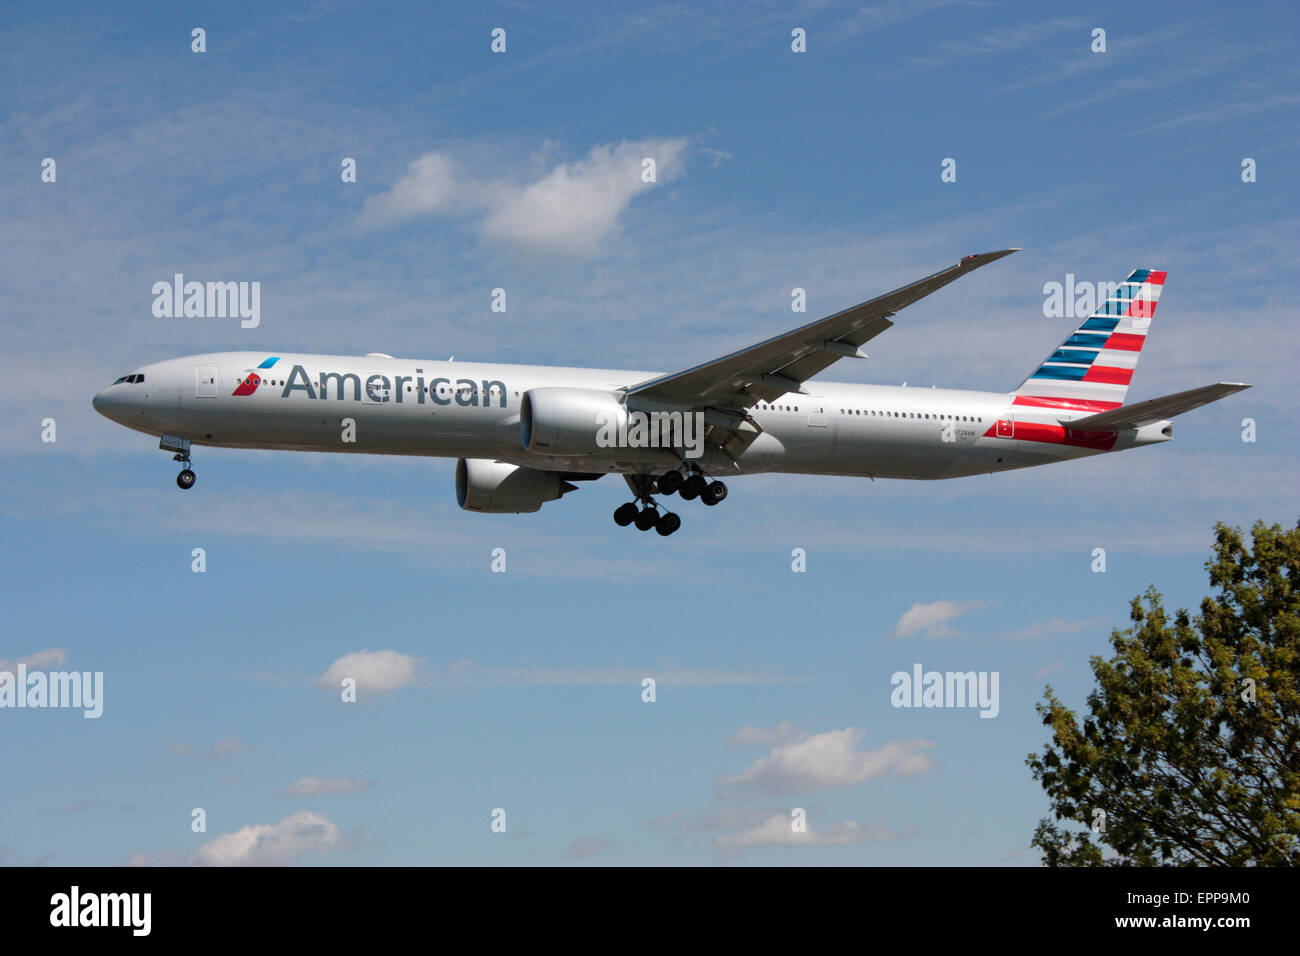 American Airlines Boeing 777-300ER long haul passenger jet approaching London Heathrow Airport after a transatlantic flight. Modern air travel. Stock Photo